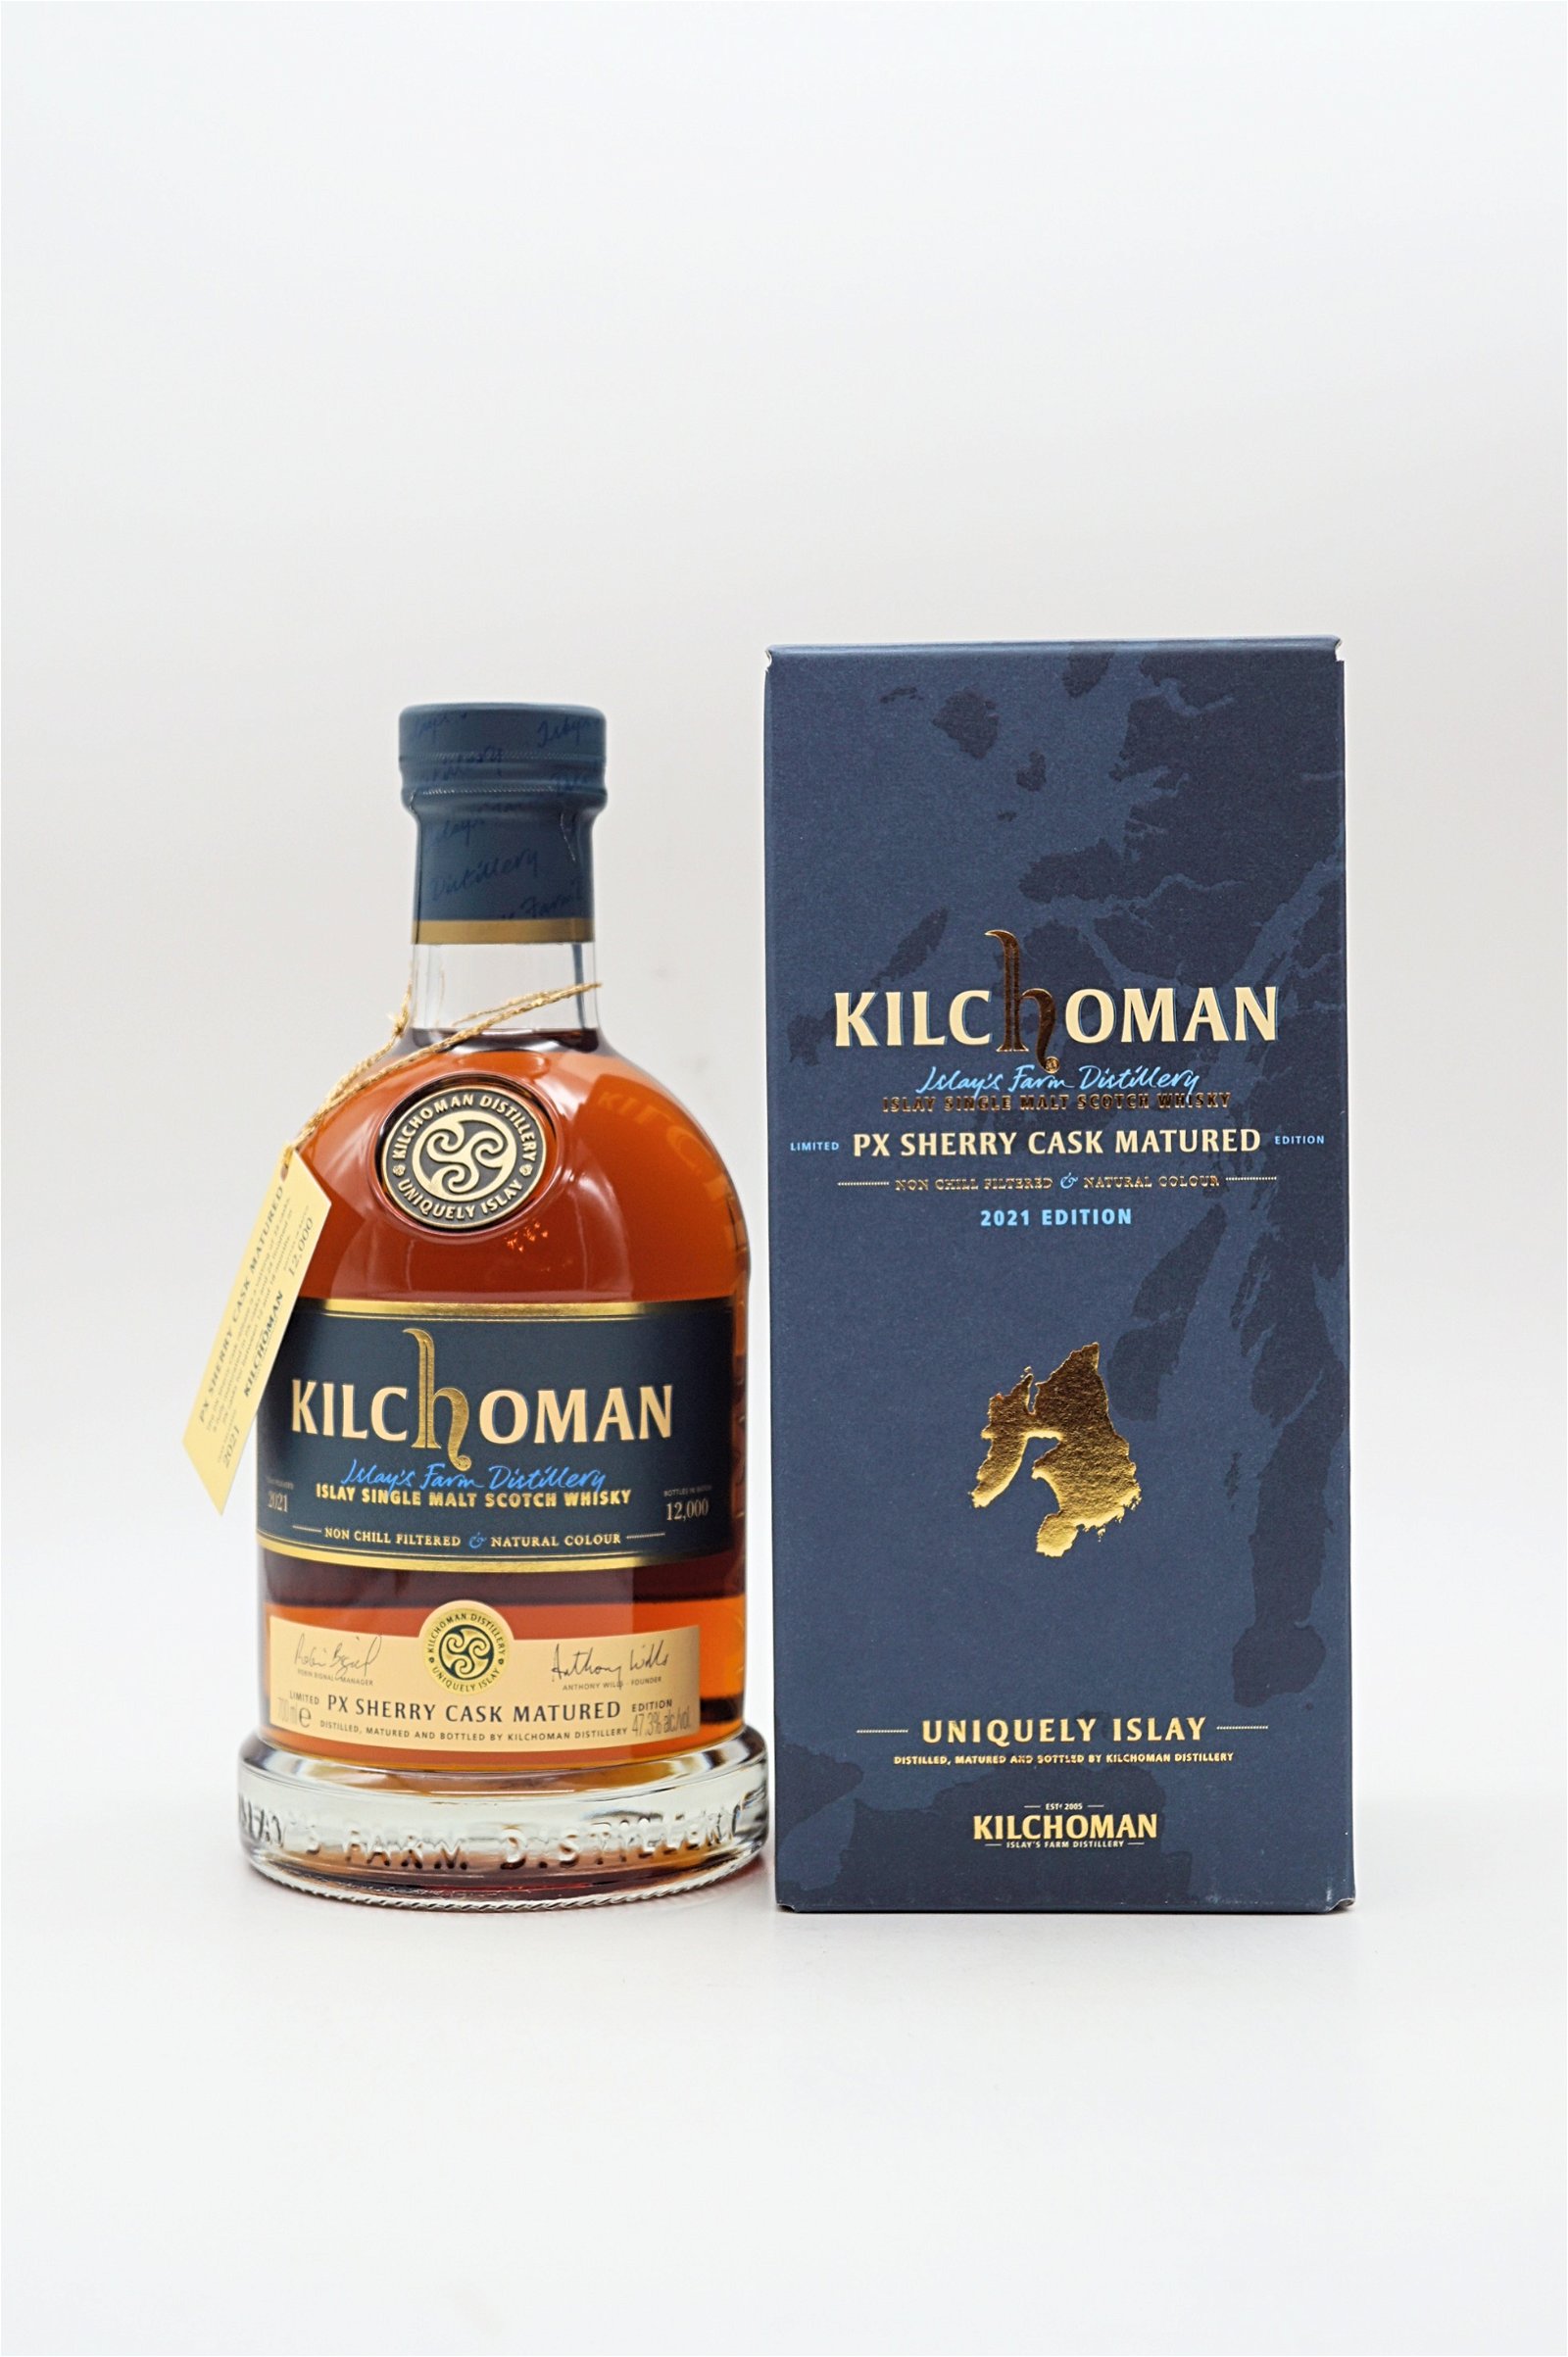 Kilchoman PX Sherry Cask Matured Islay Single Malt Scotch Whisky